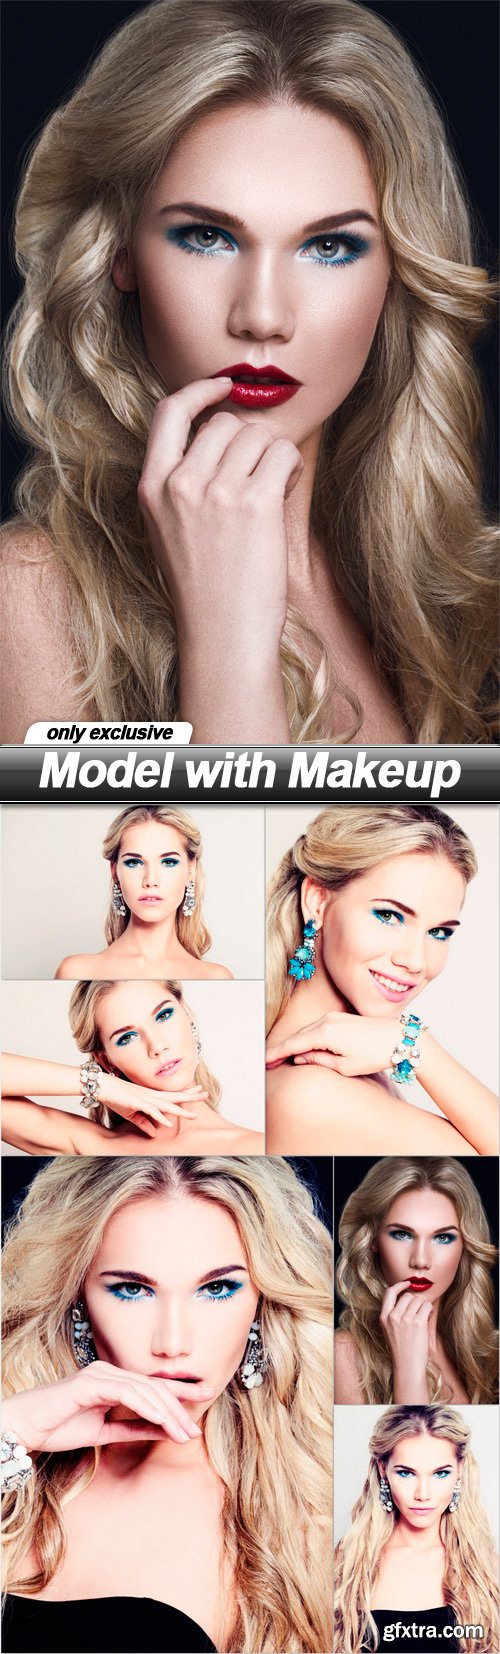 Model with Makeup - 6 UHQ JPEG